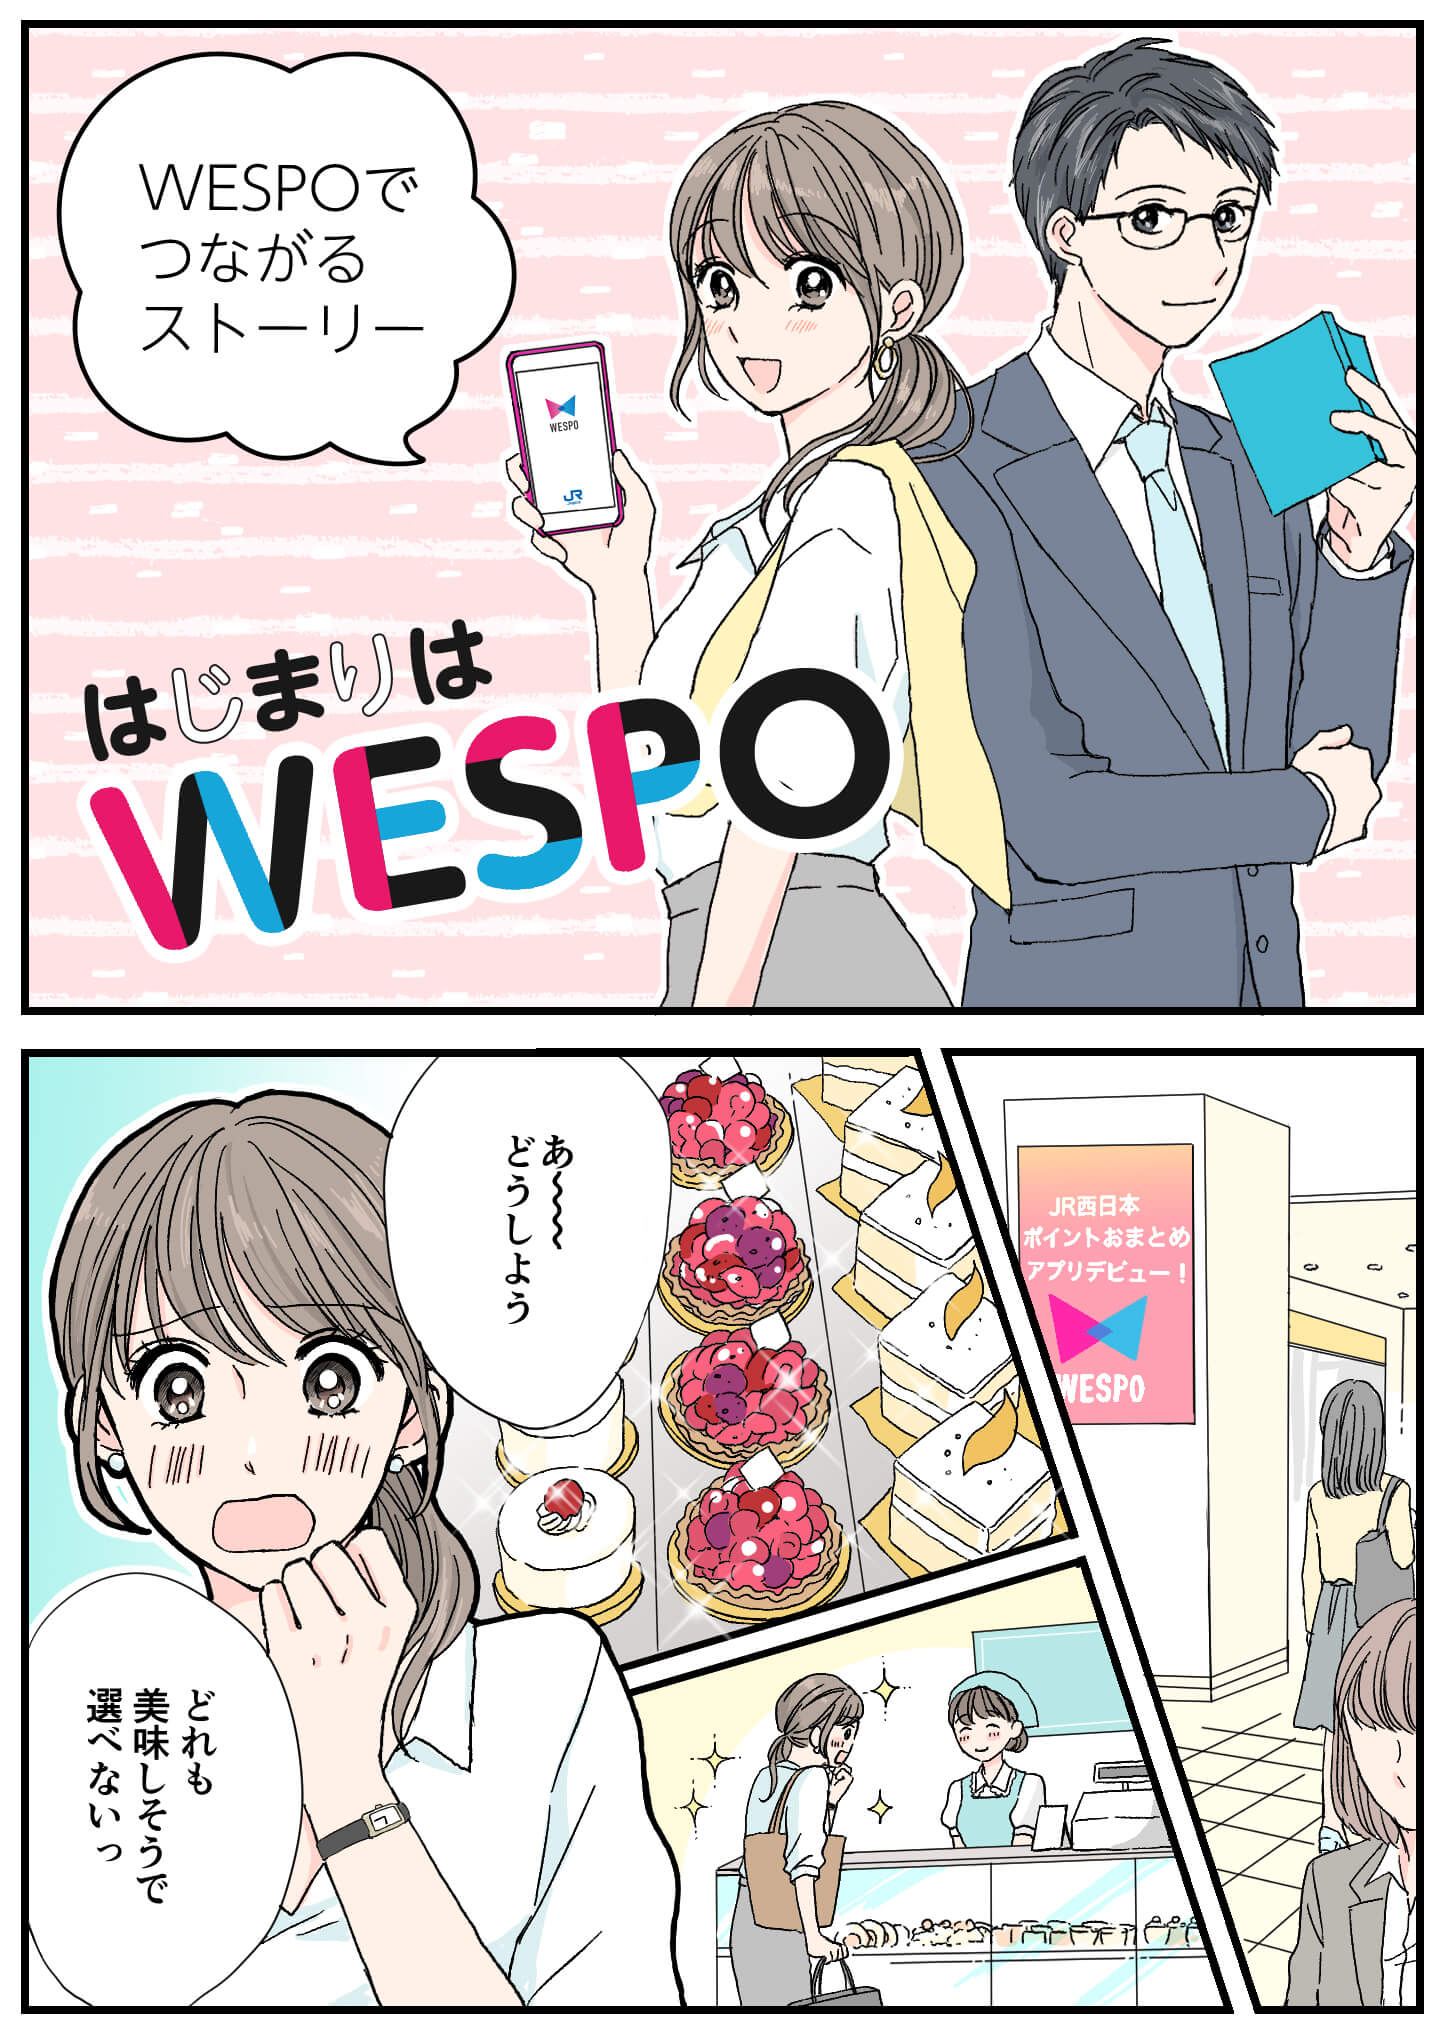 JR西日本 WESPO ダイジェスト リーフレット